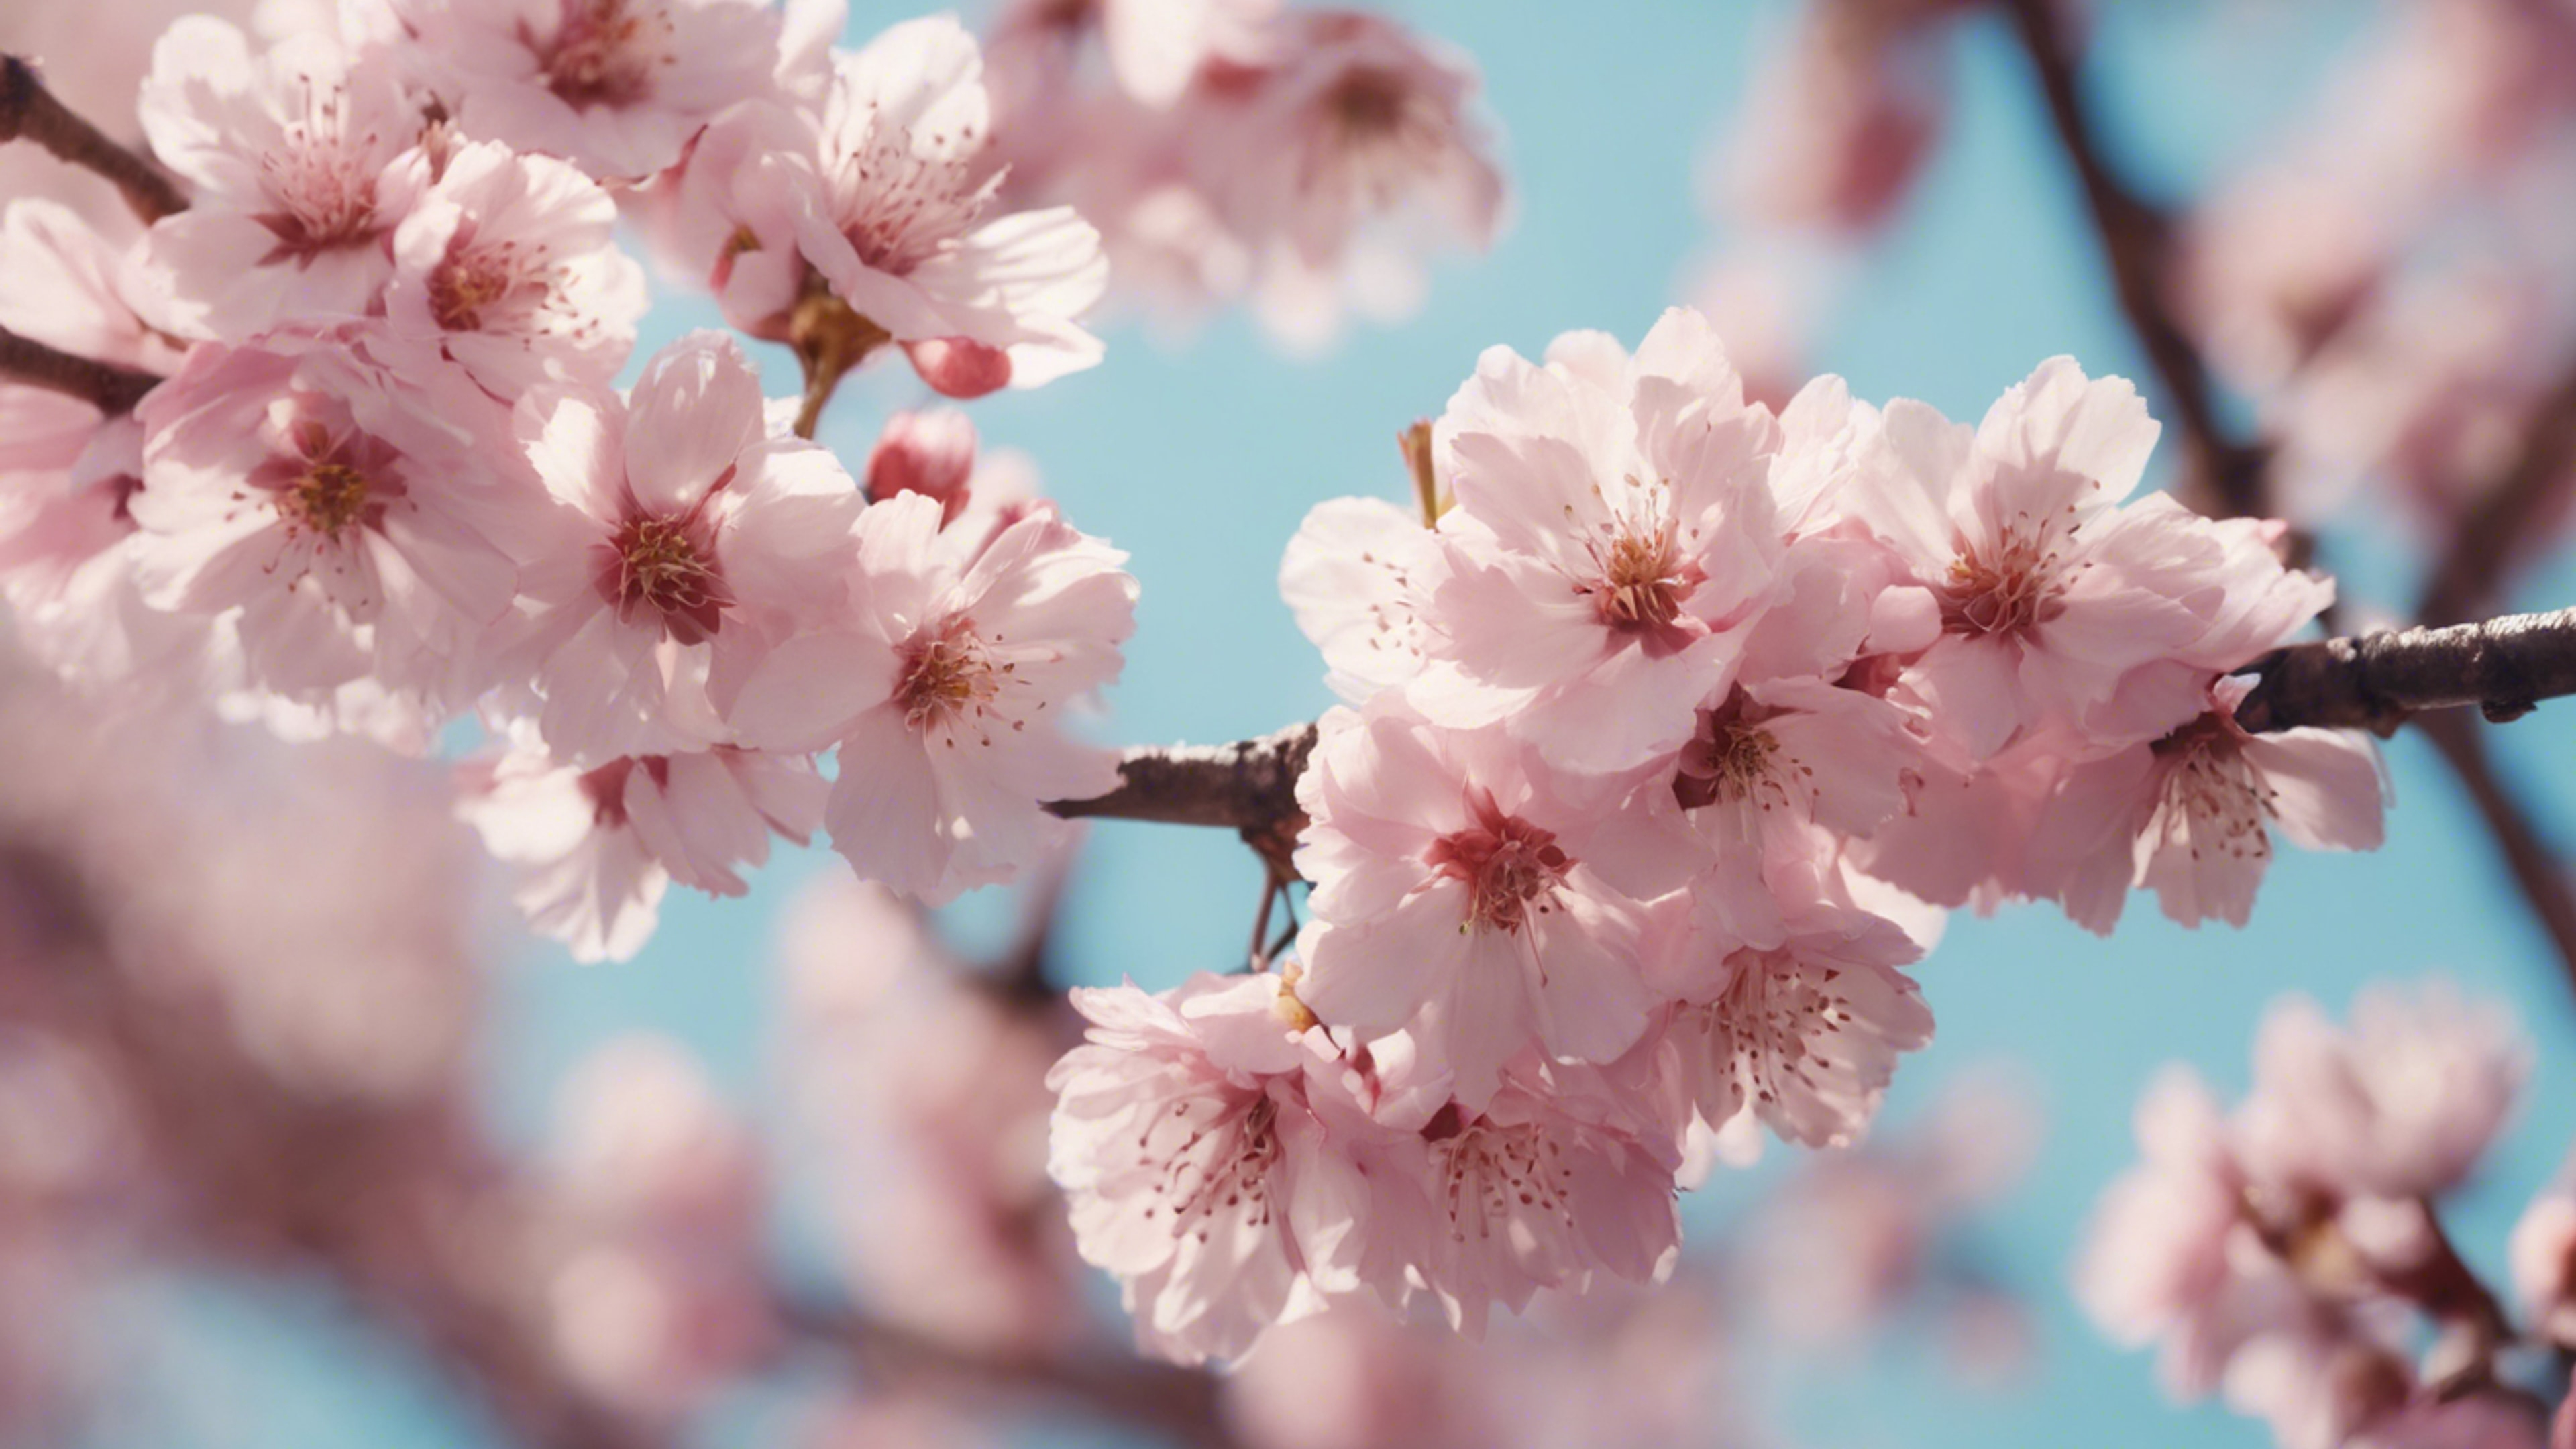 A vibrant scene of pastel pink cherry blossoms falling gently. ផ្ទាំង​រូបភាព[c8bce7433f184c22a8f5]